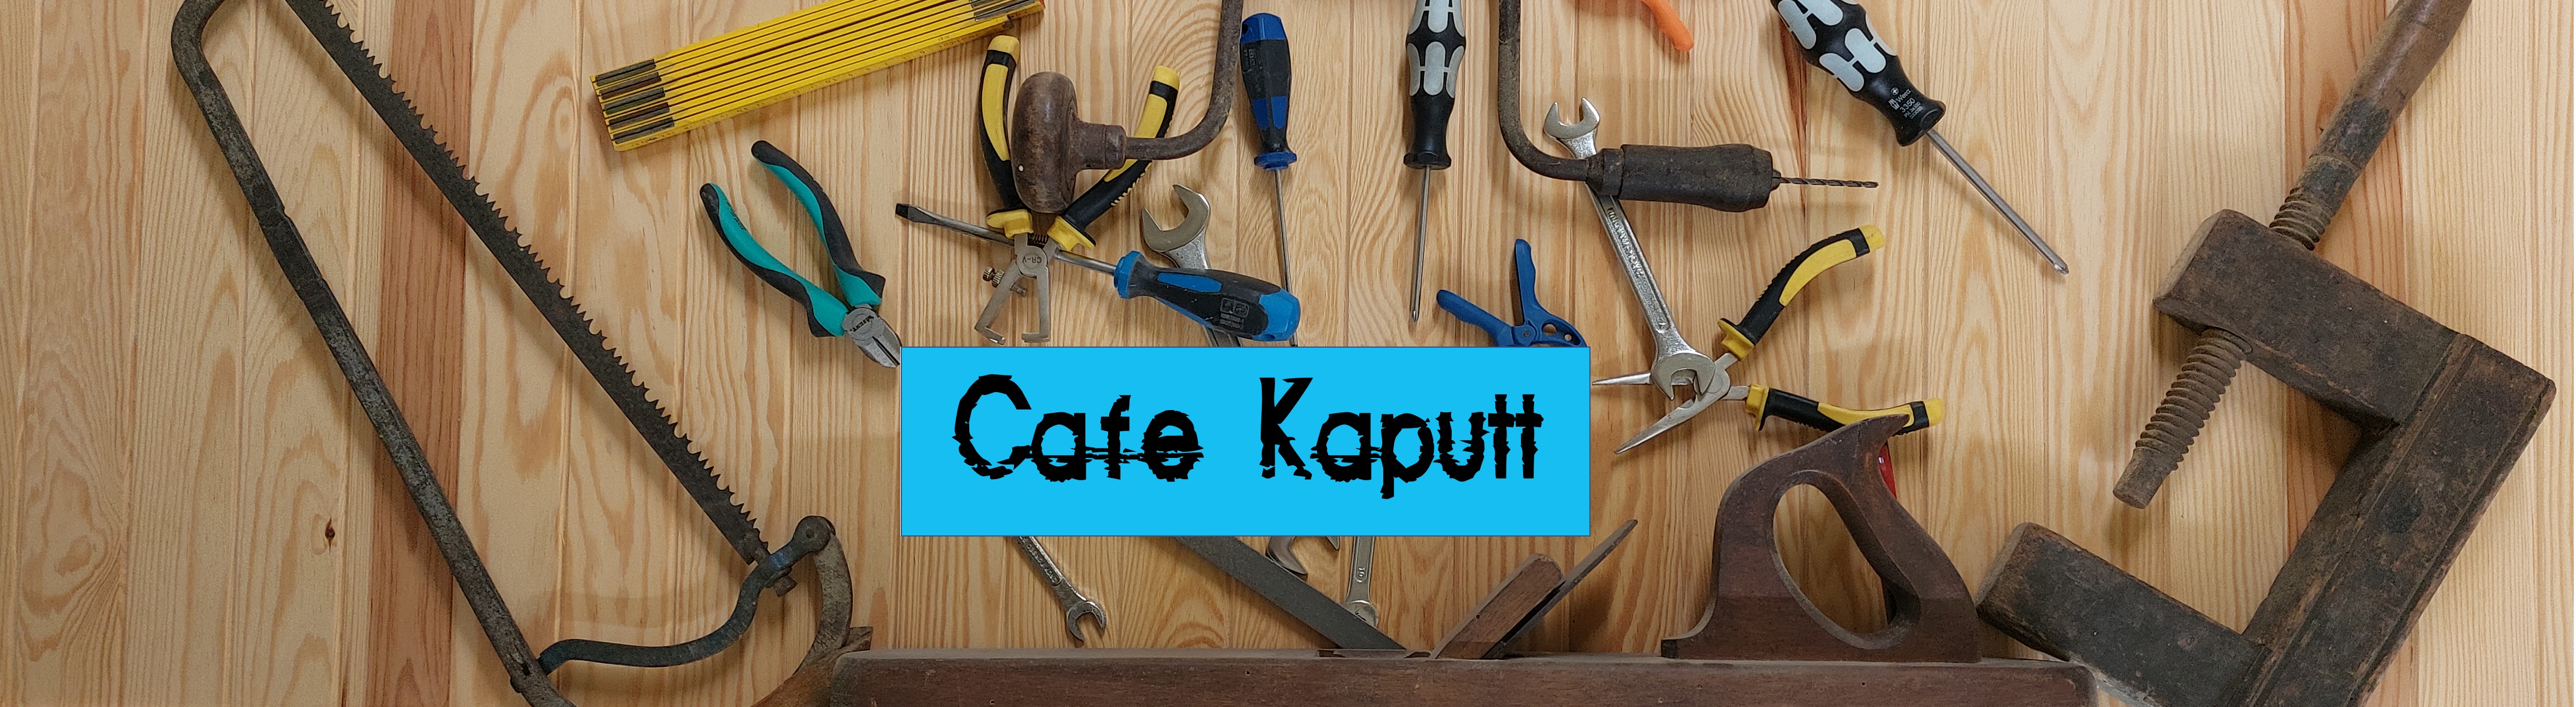 Cafe Kaputt Rheinsheim